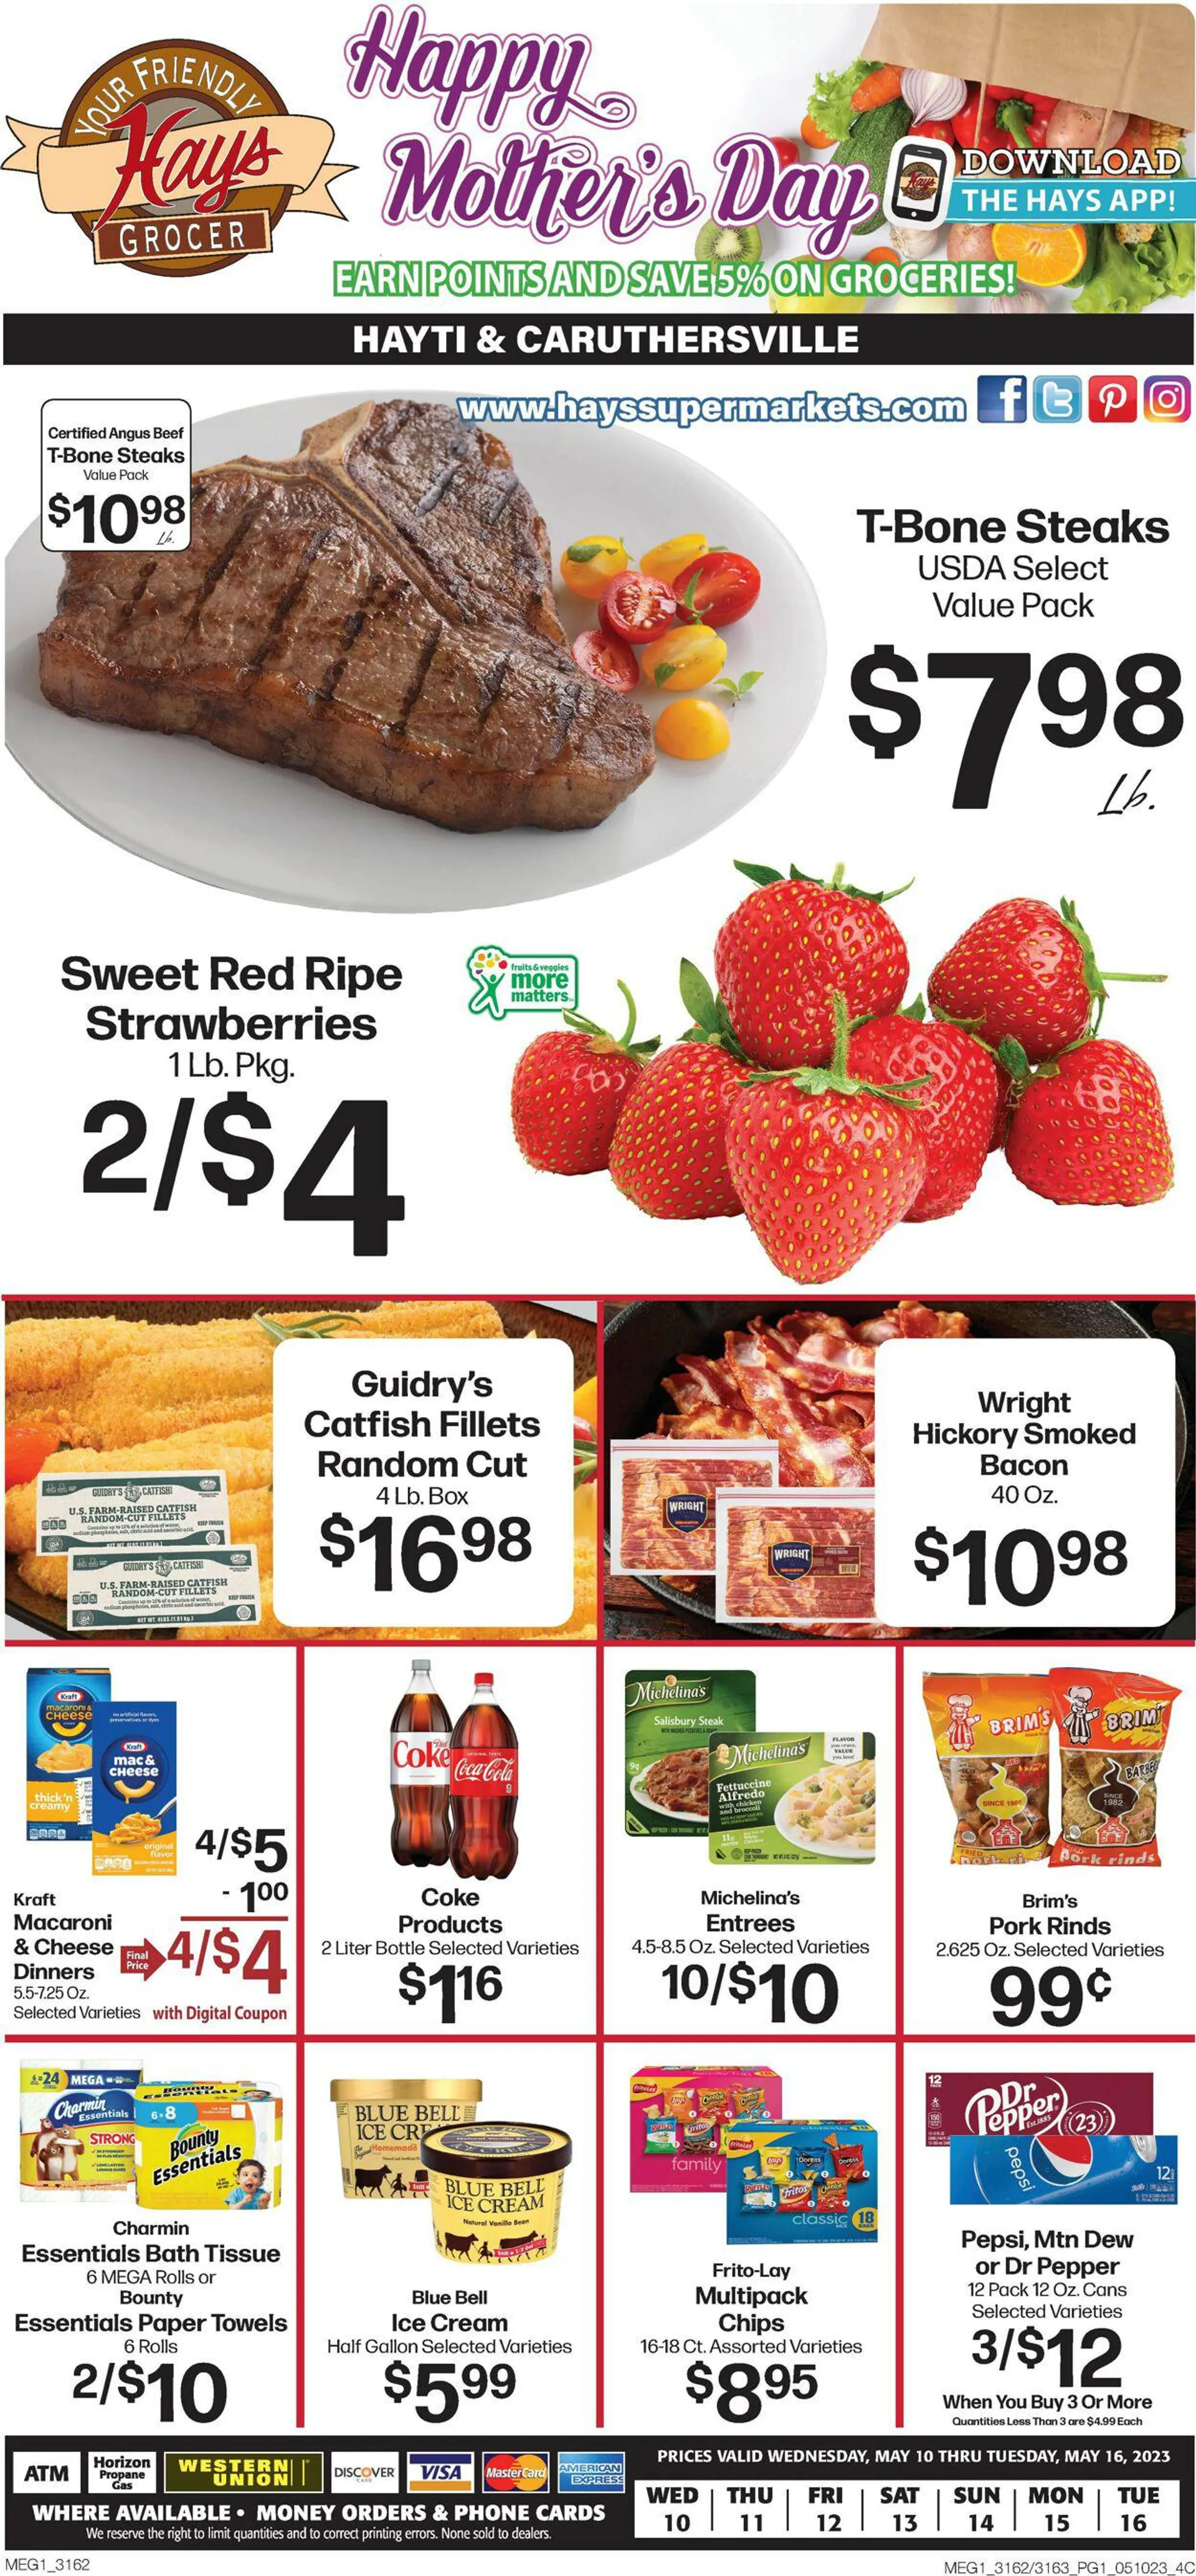 Hays Supermarket Current weekly ad - 3